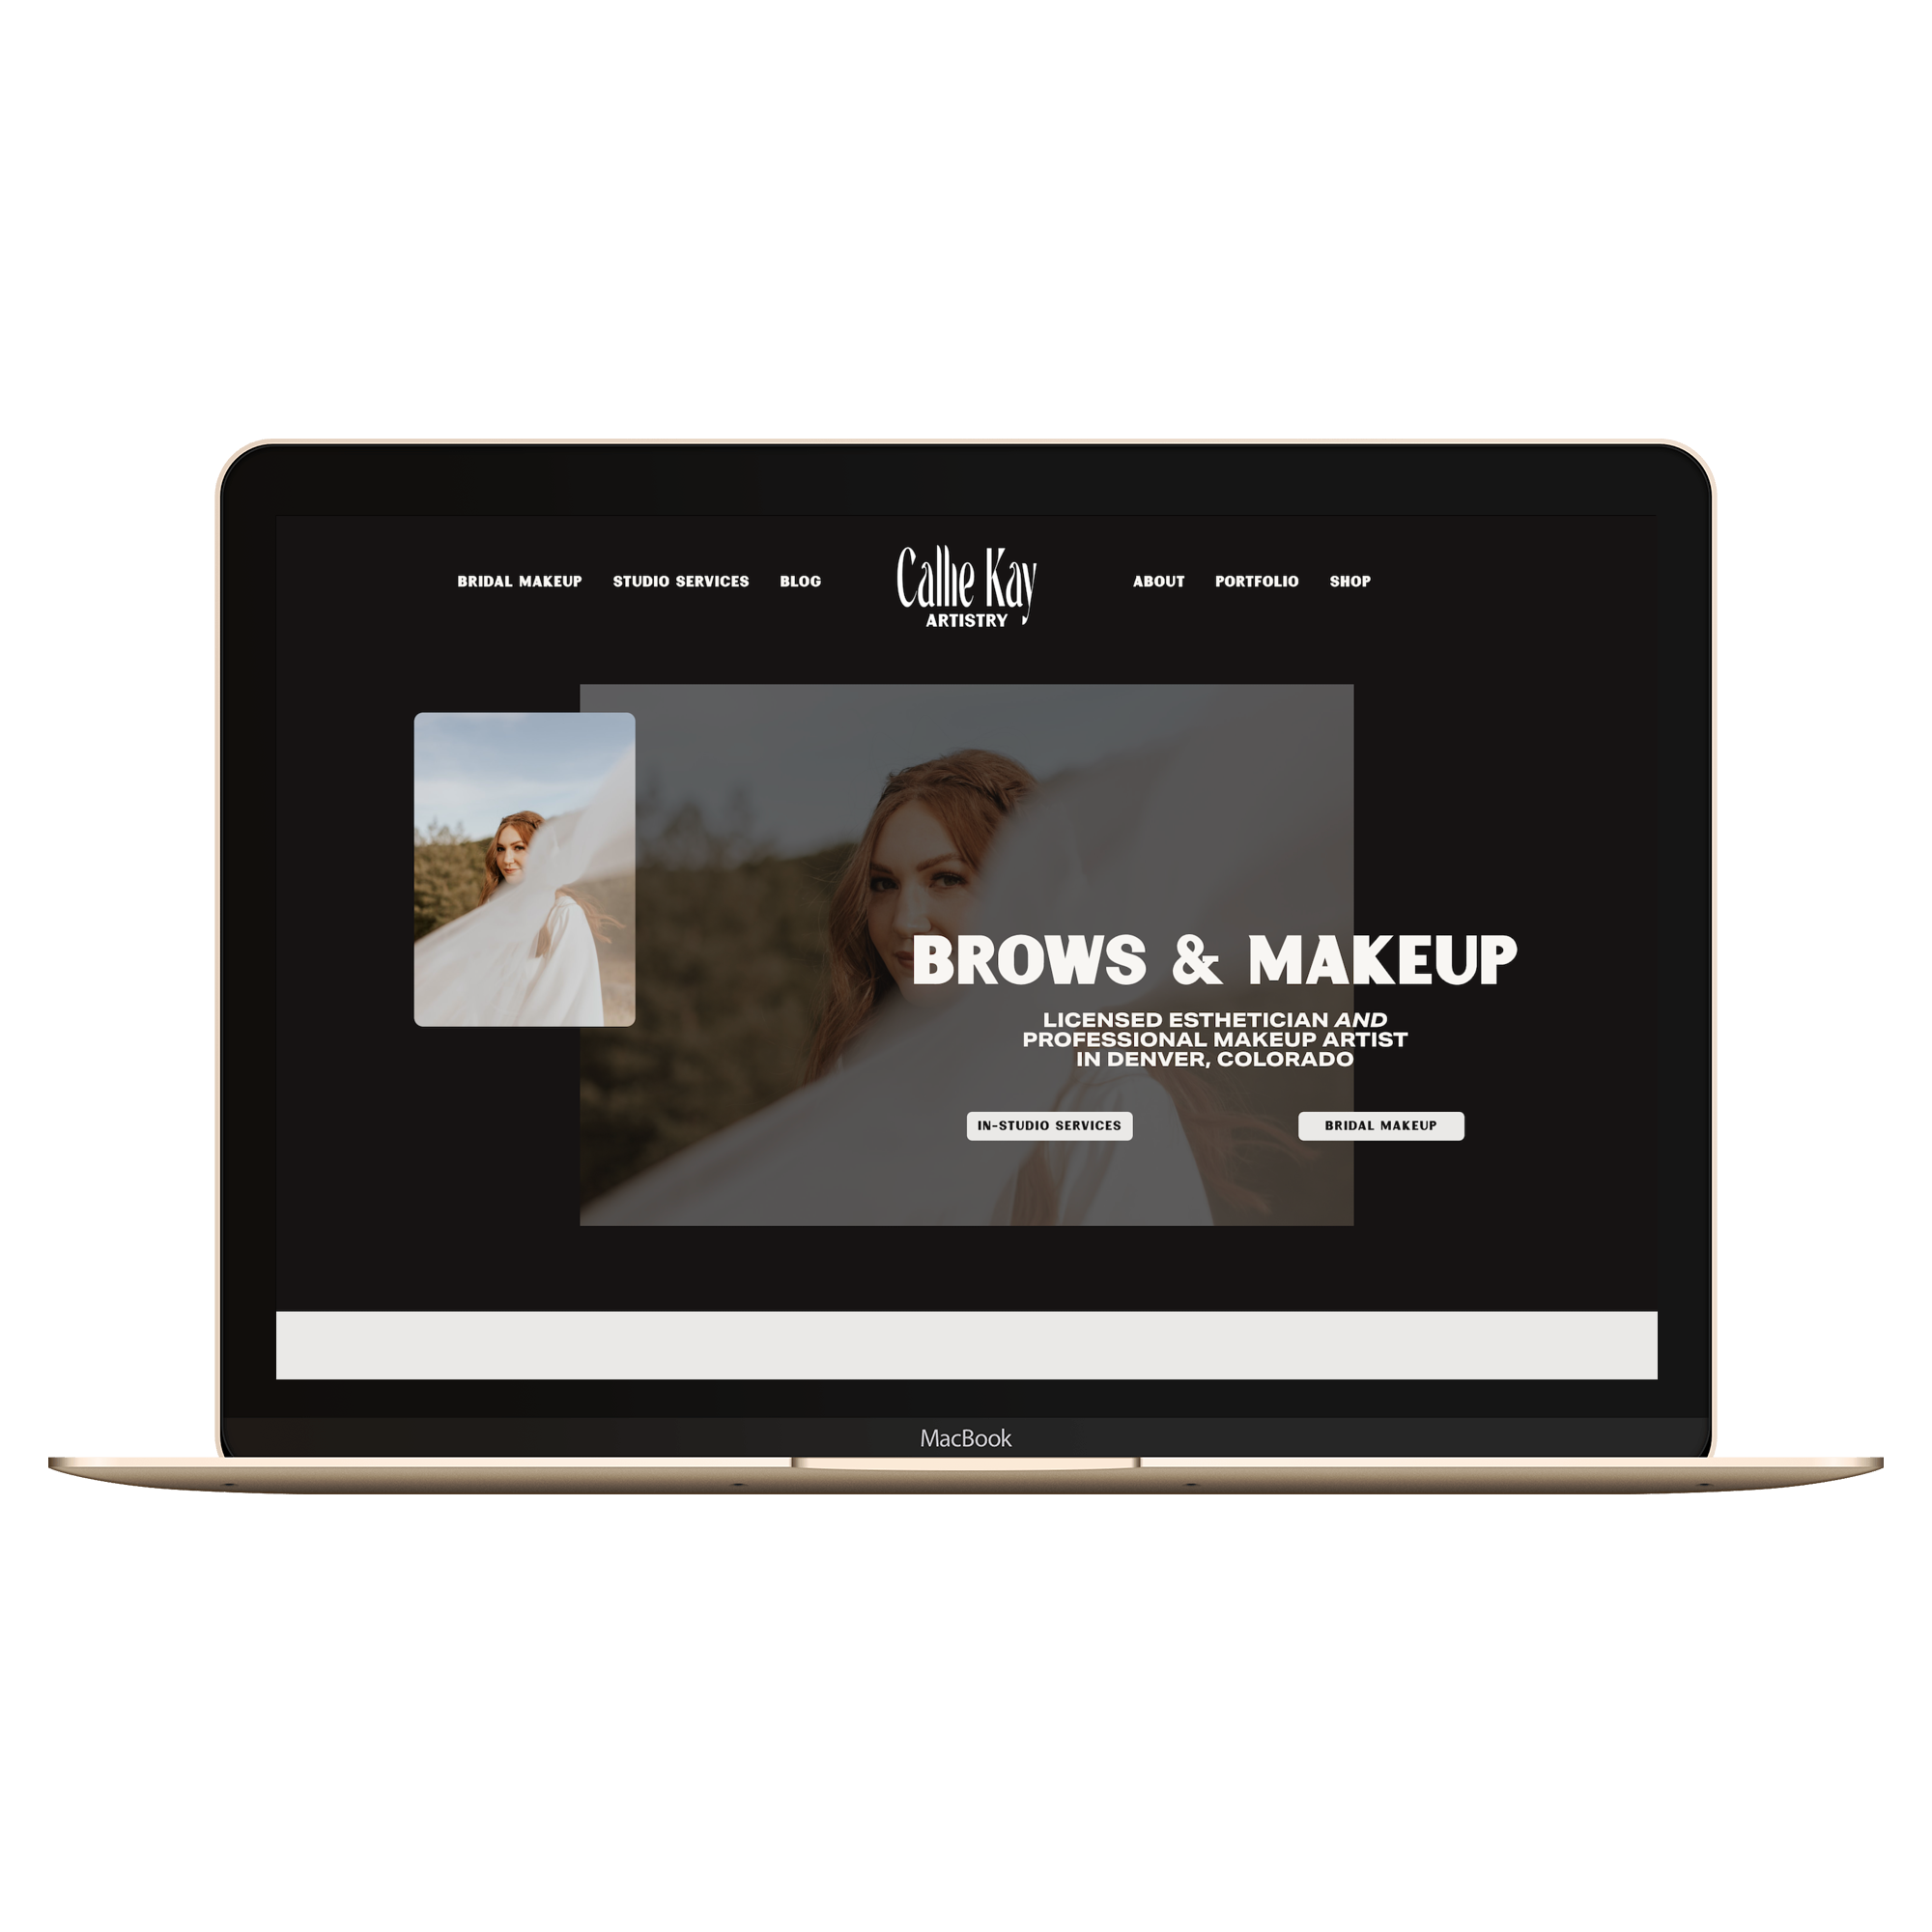 Callie Kay Artistry - website mock up - laptop - home page.png